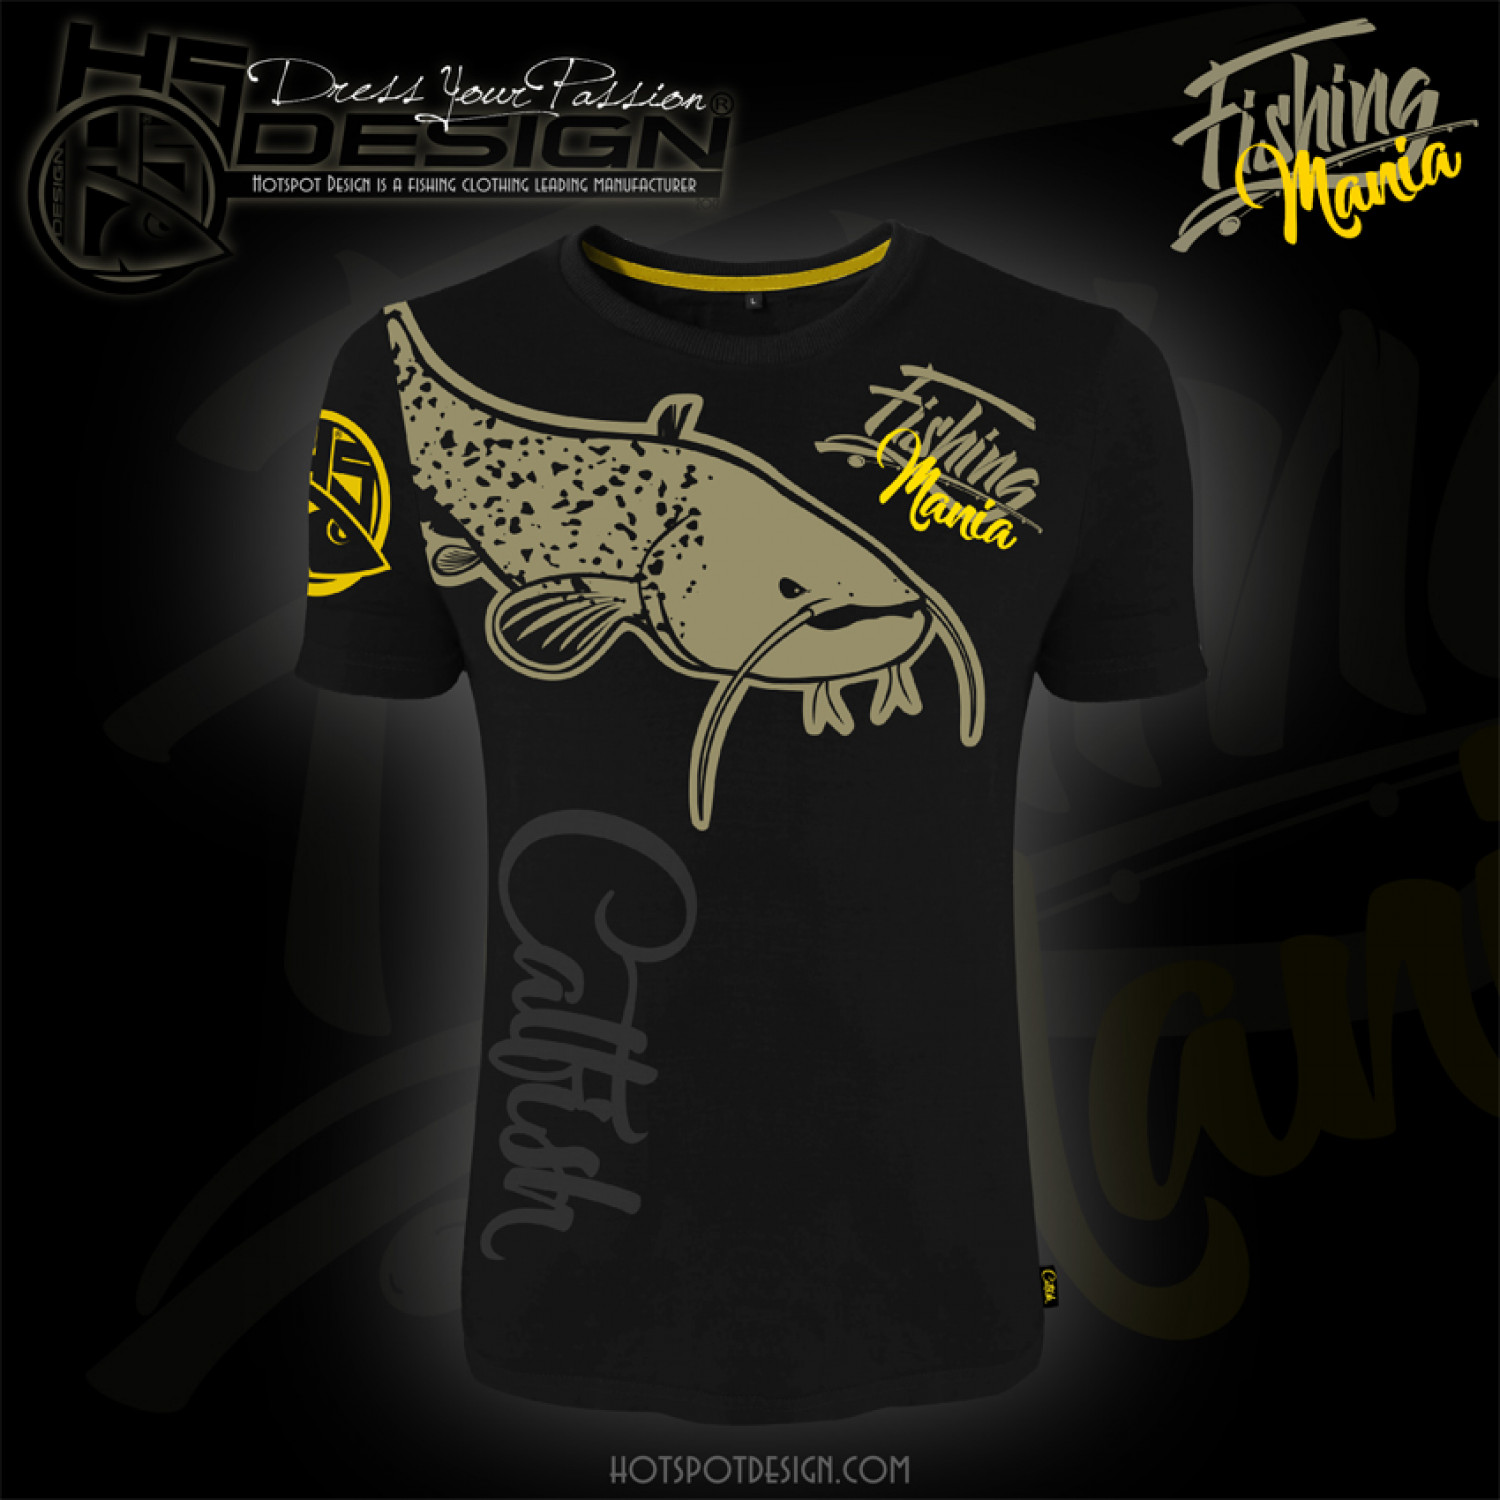 Hotspot Design T-shirt woman Fishing Mania Carpfishing Damen-T-Shirt 